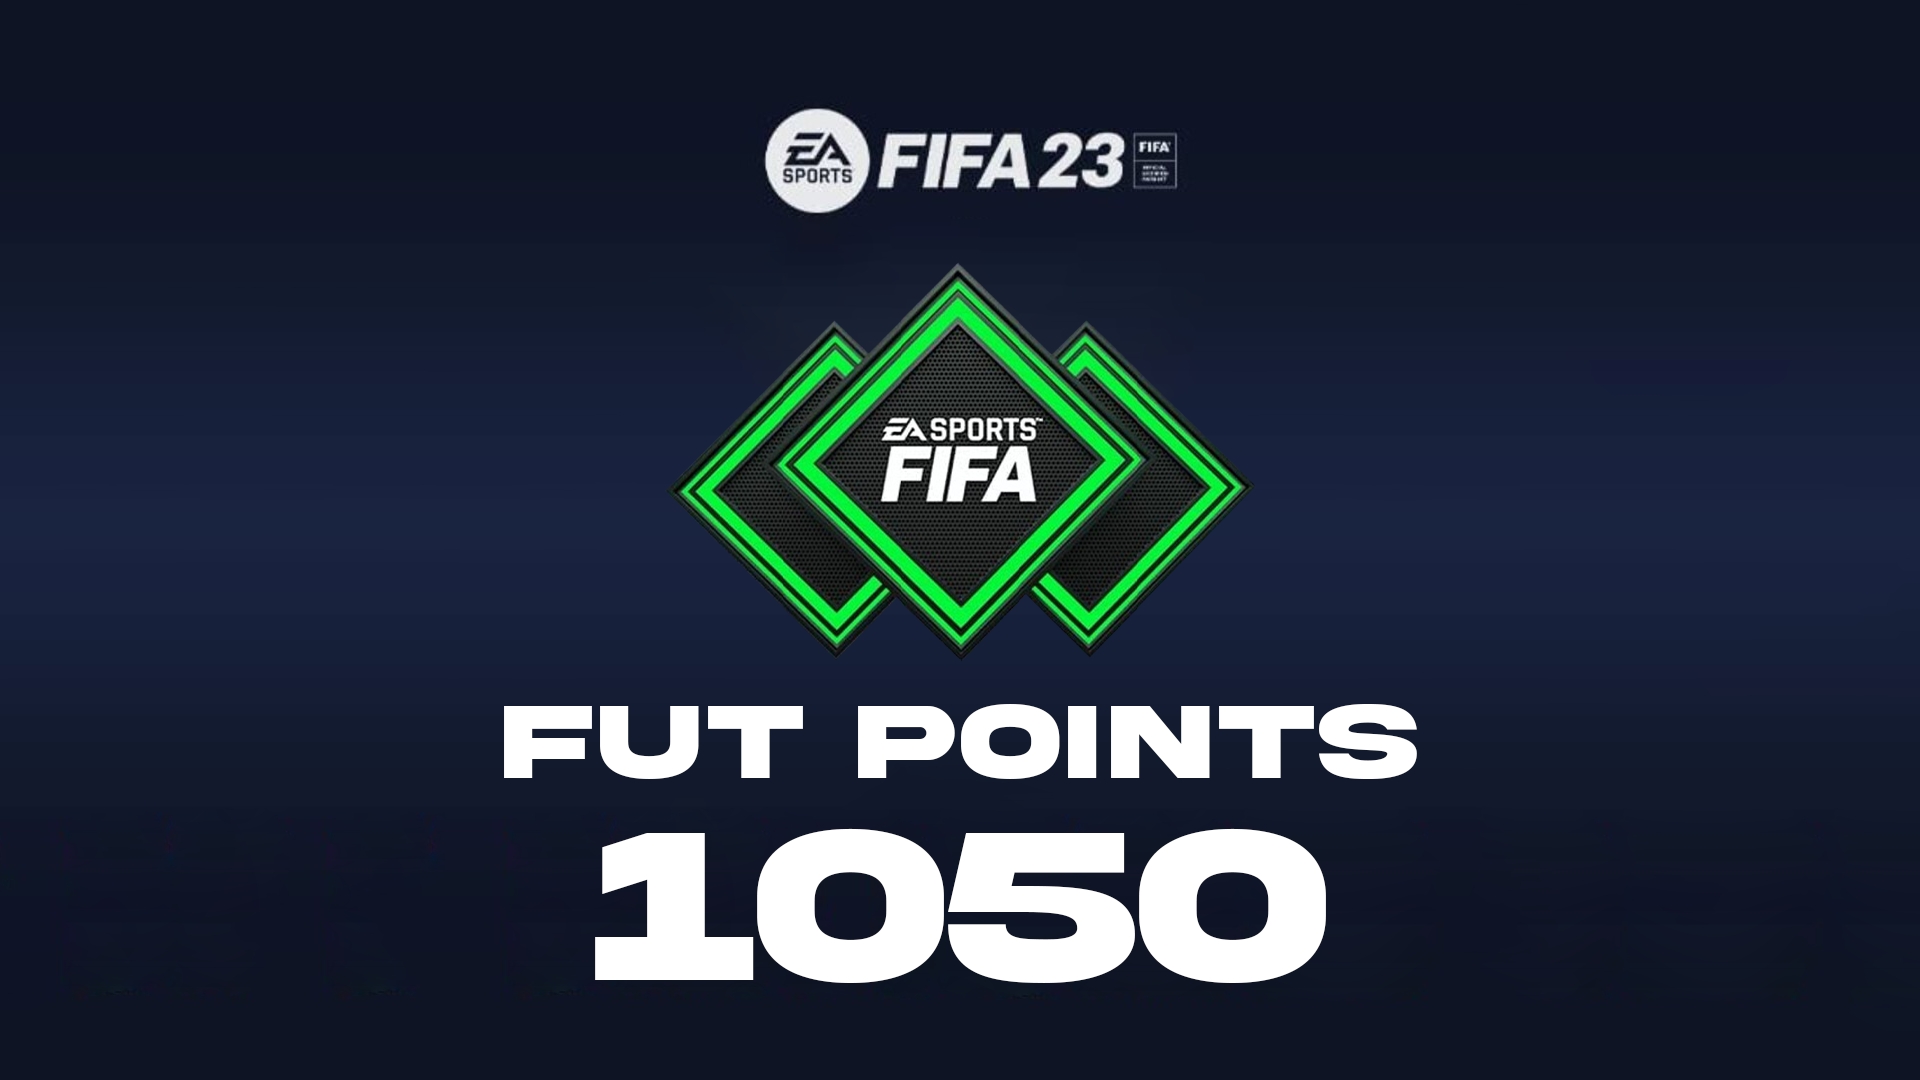 Buy FIFA 23: 1050 FUT Points